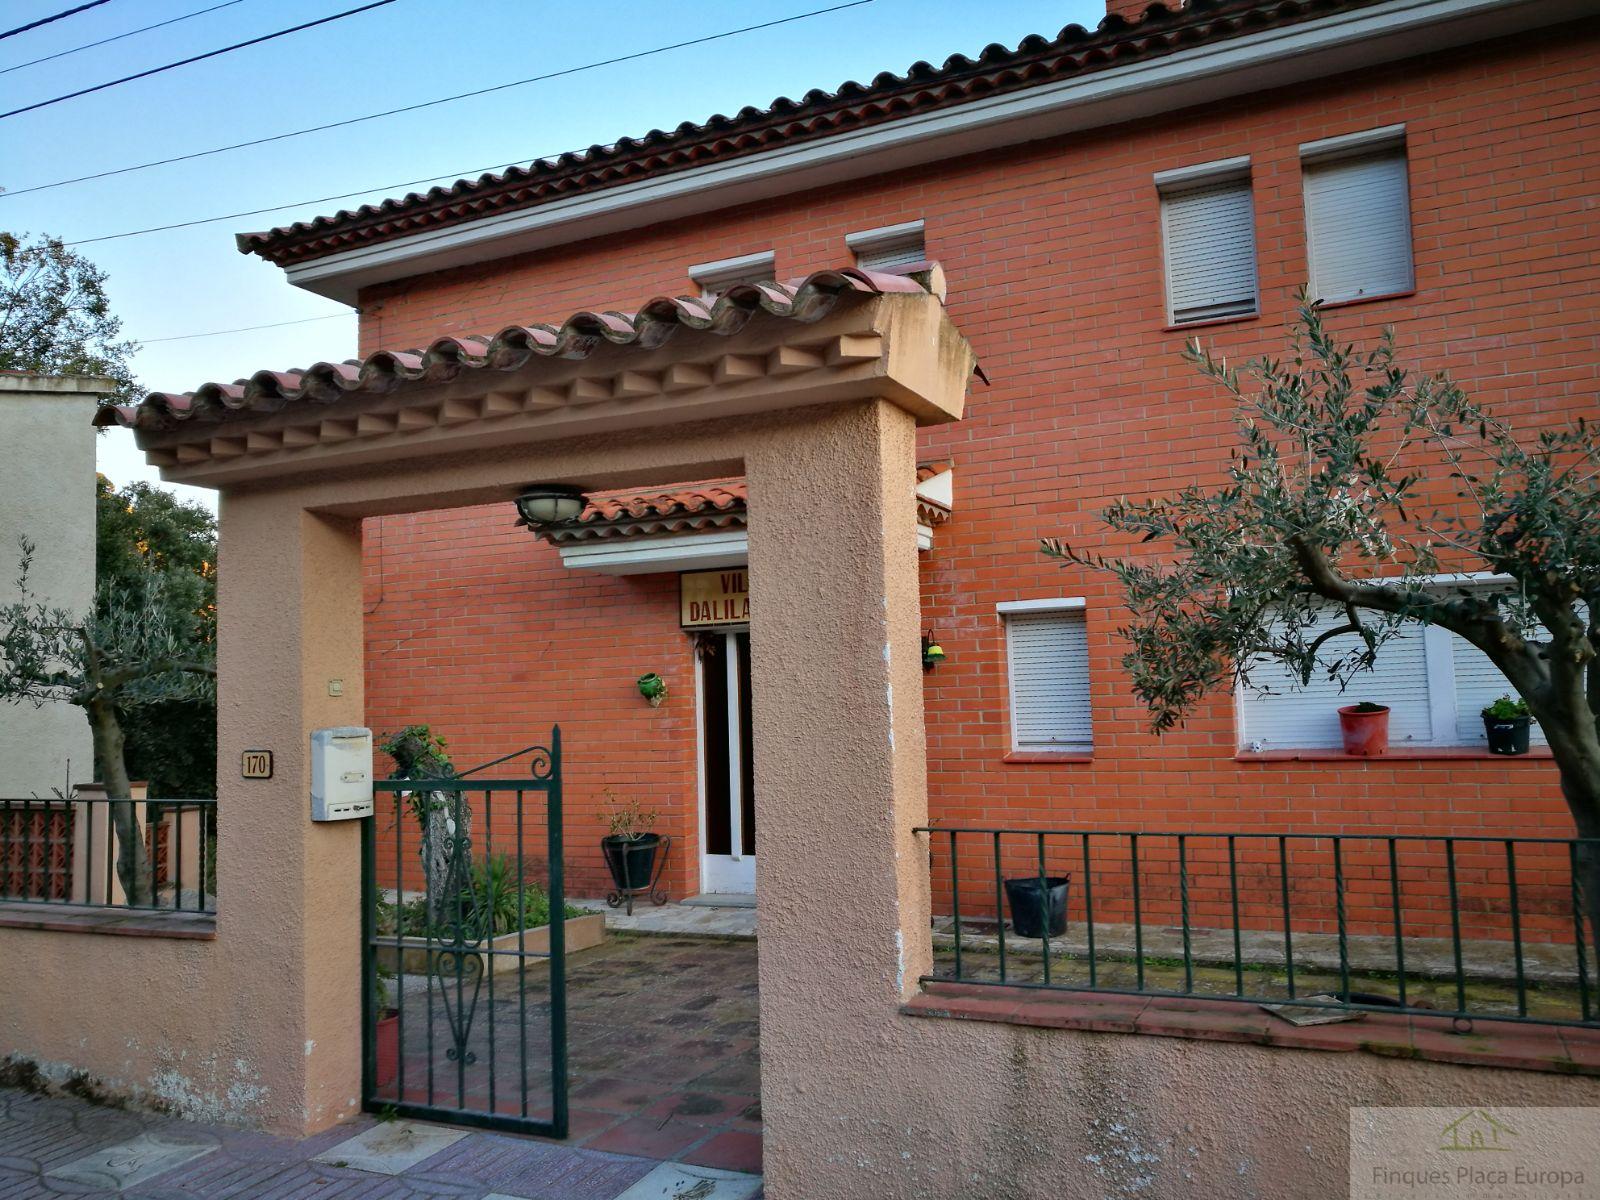 Vente de maison dans Santa Cristina d Aro